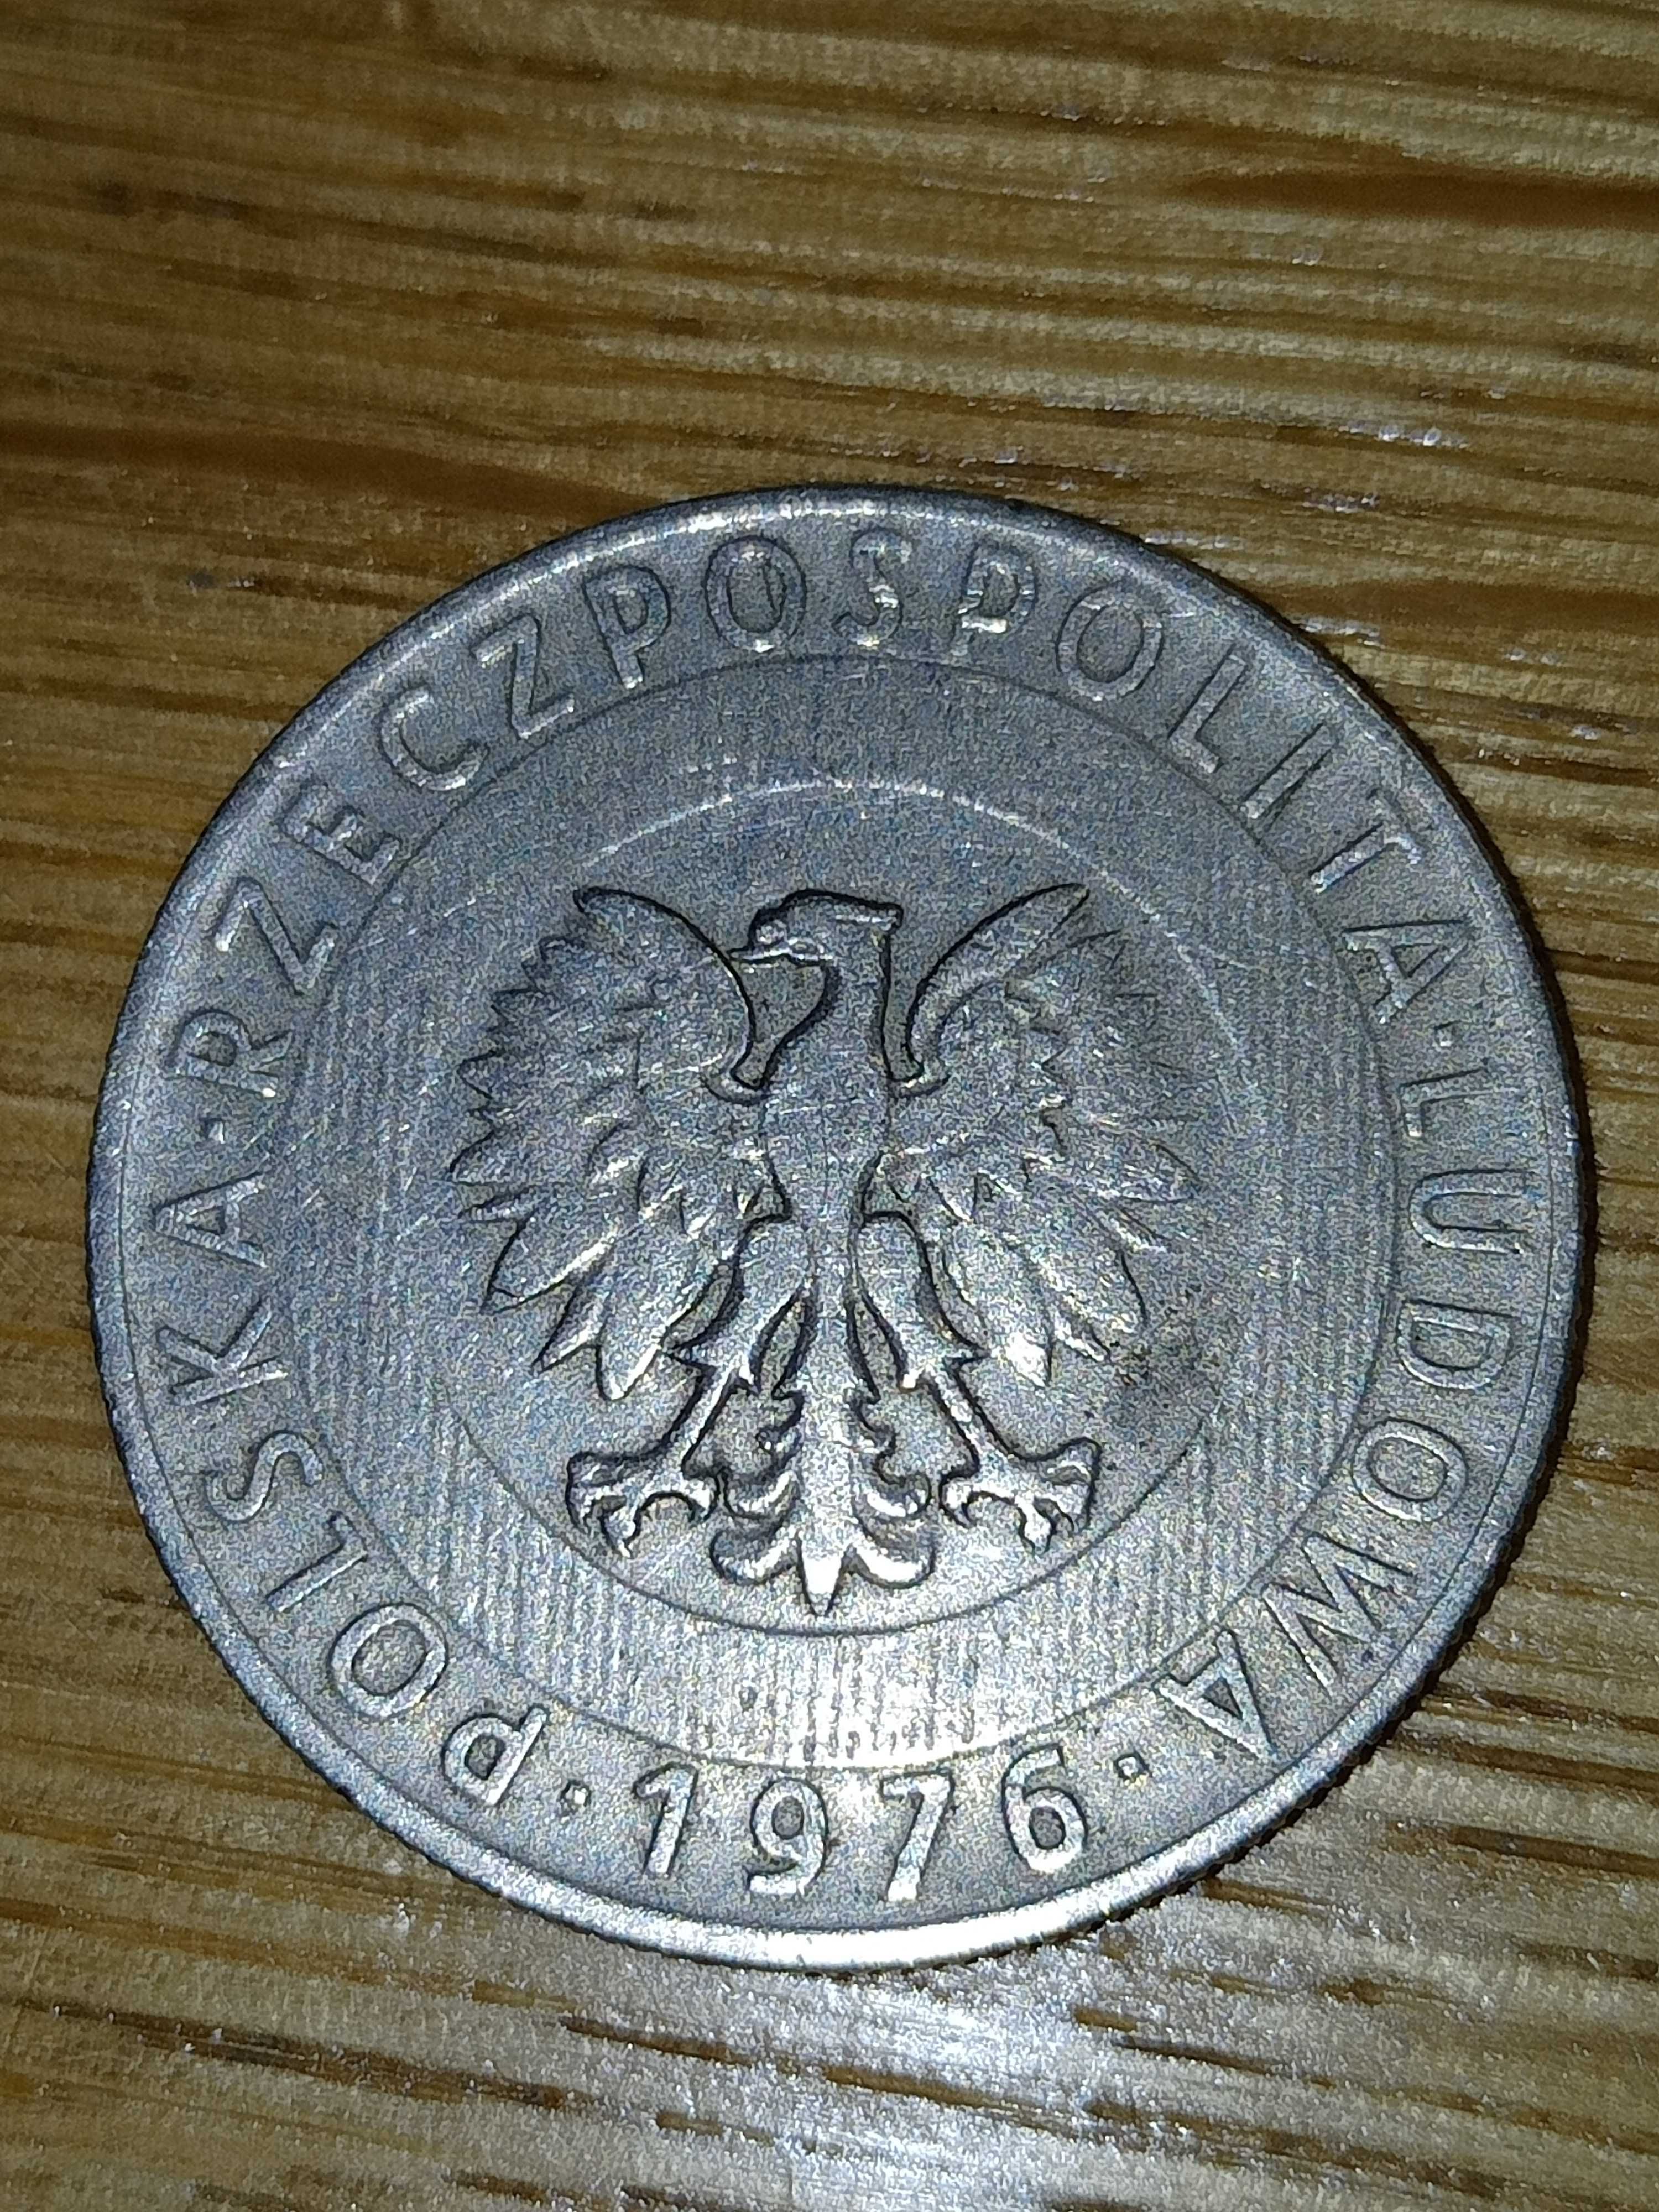 Moneta z Prl rok 1976